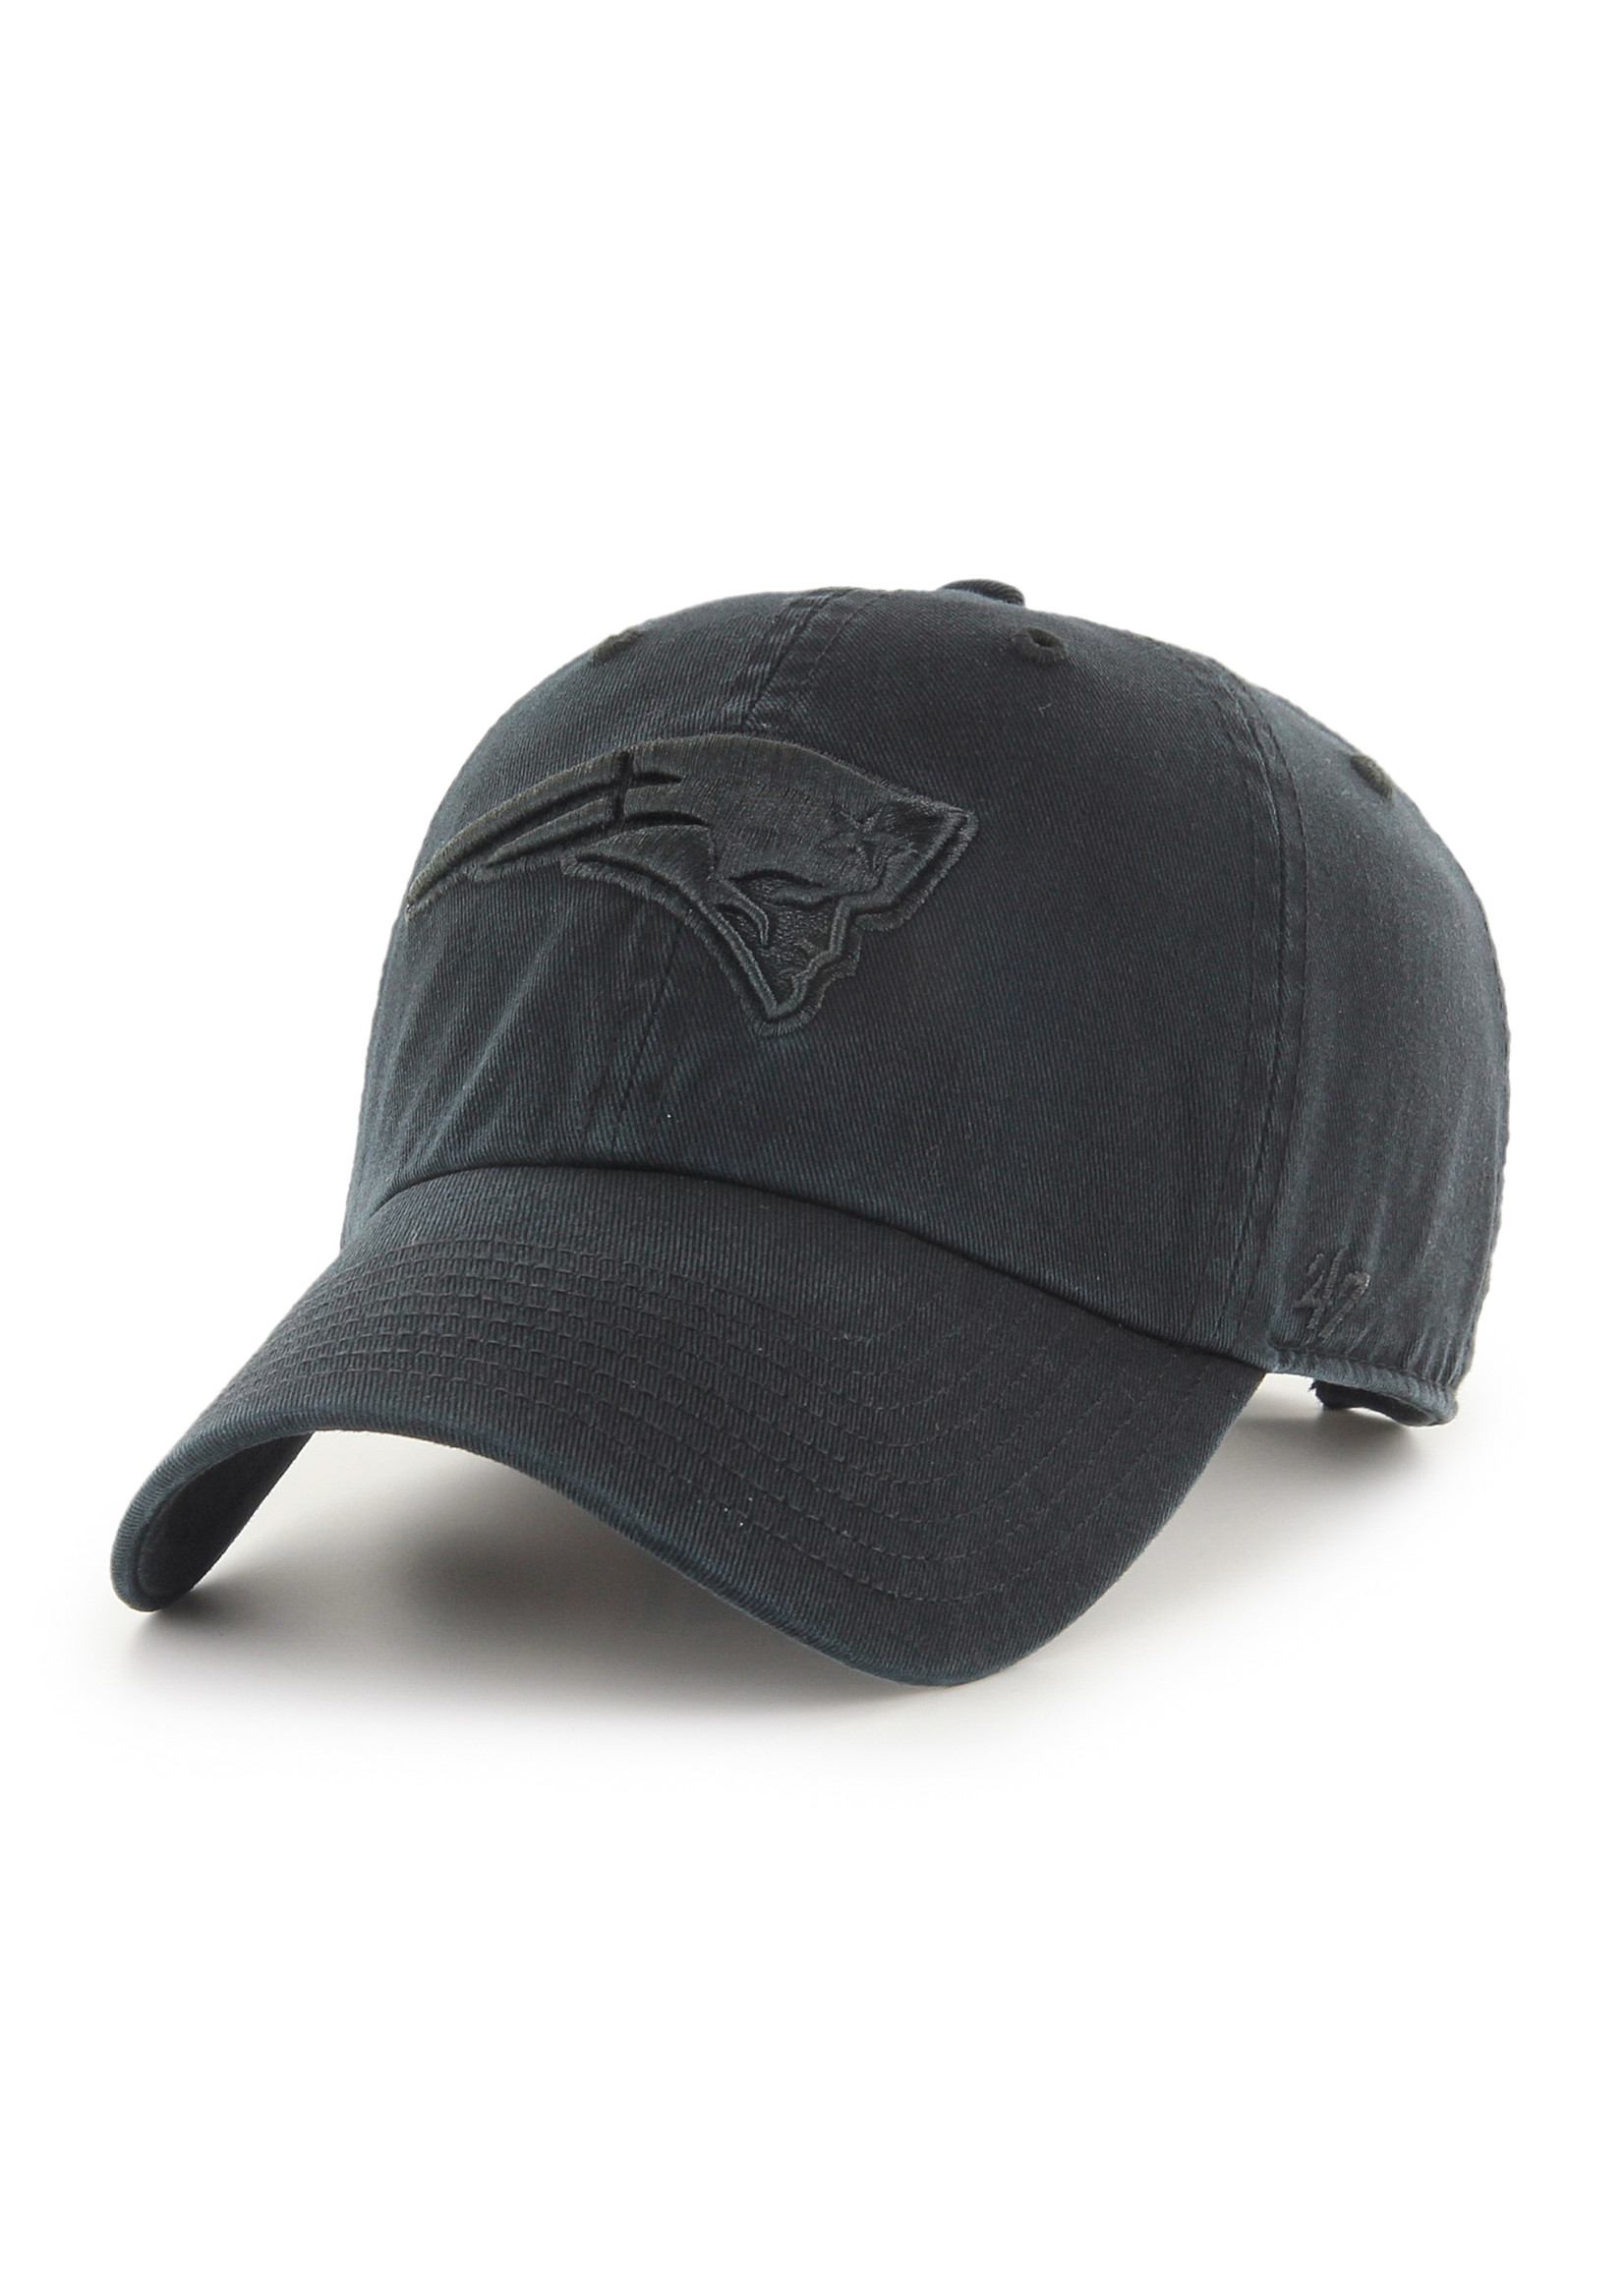 '47 Brand Patriots Hat - Black/Black